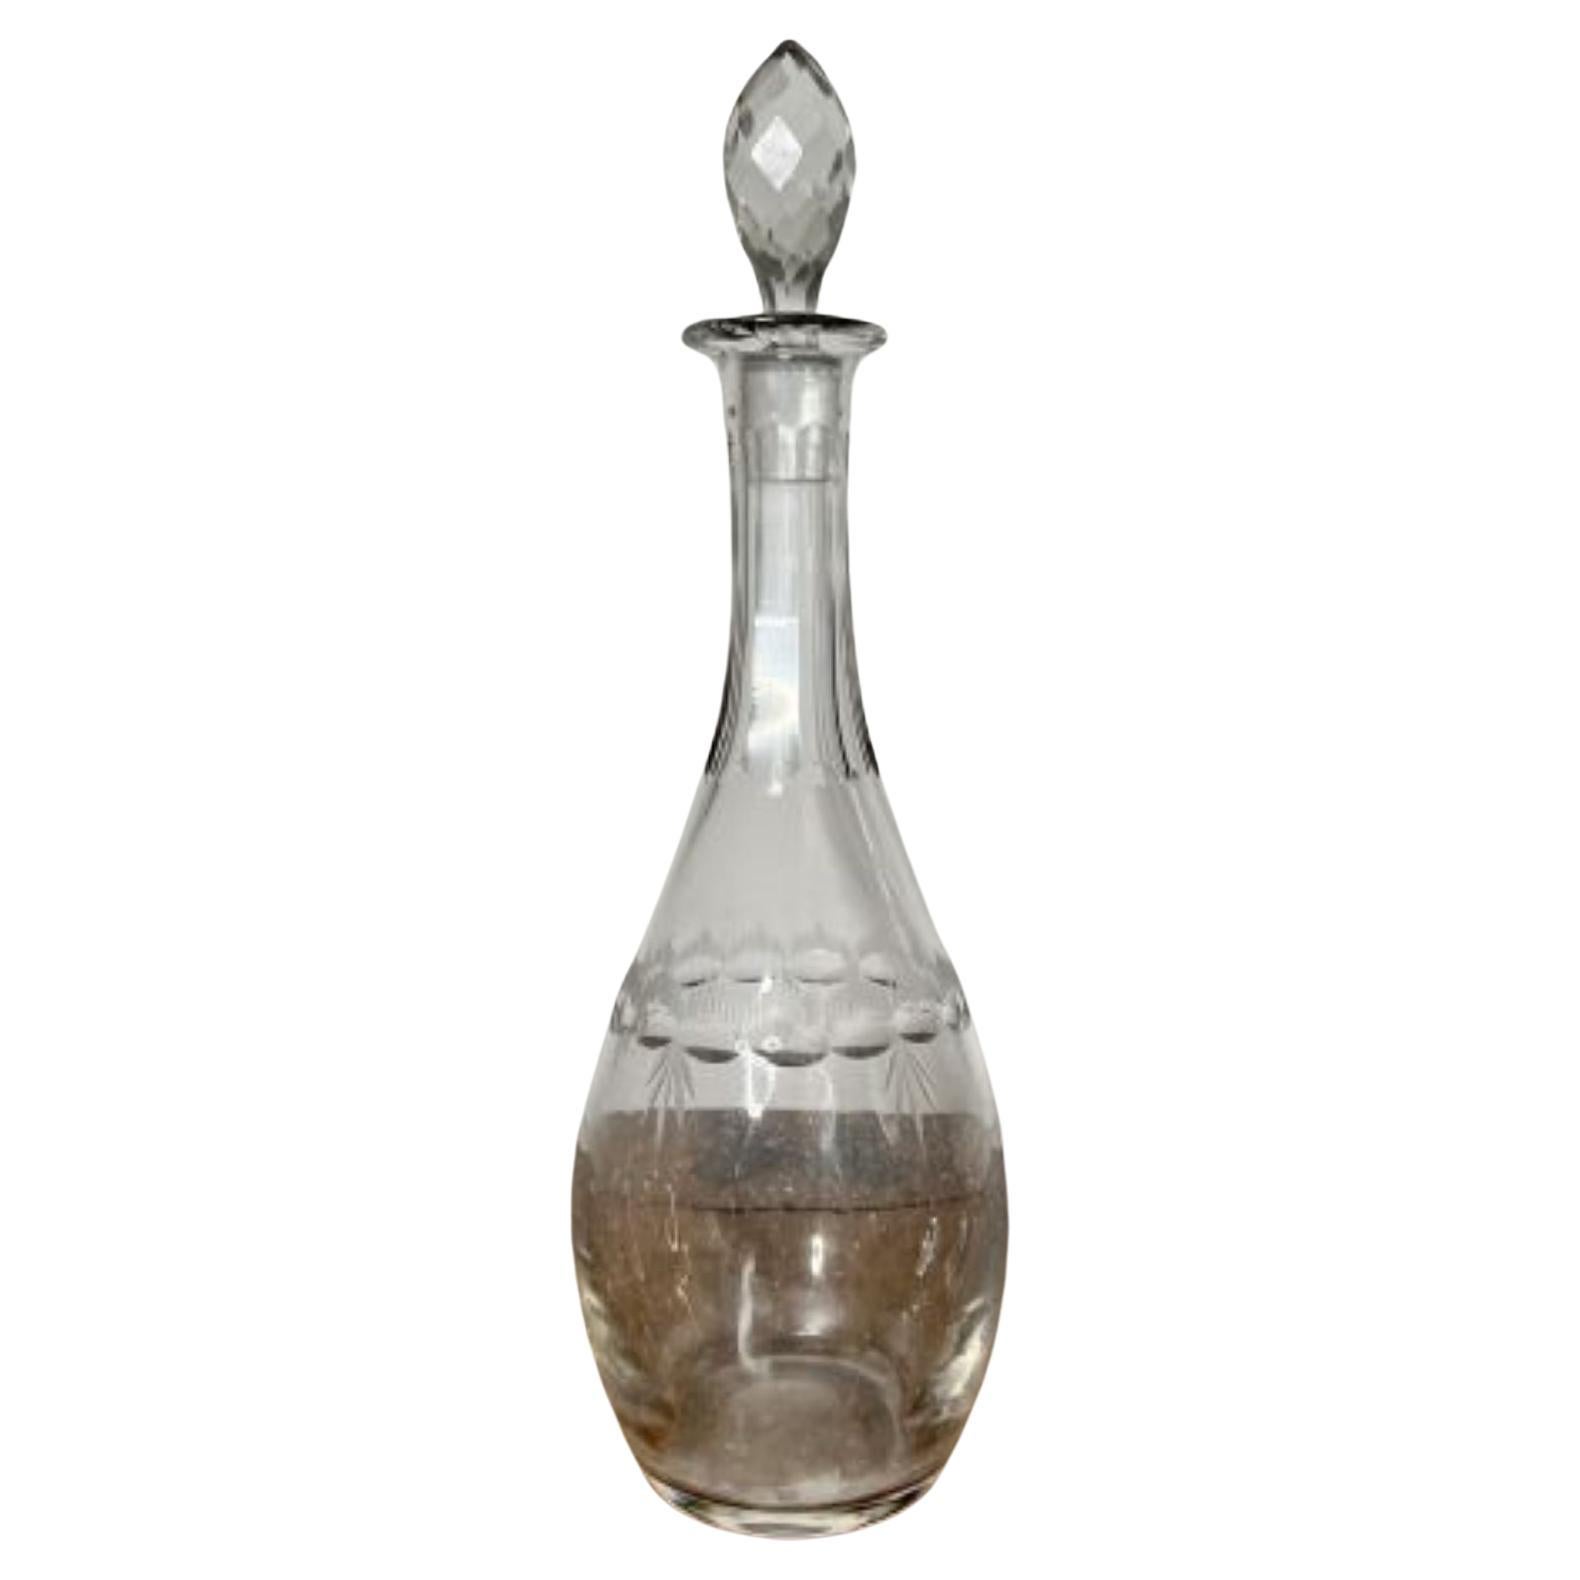 Quality antique Edwardian glass decanter 